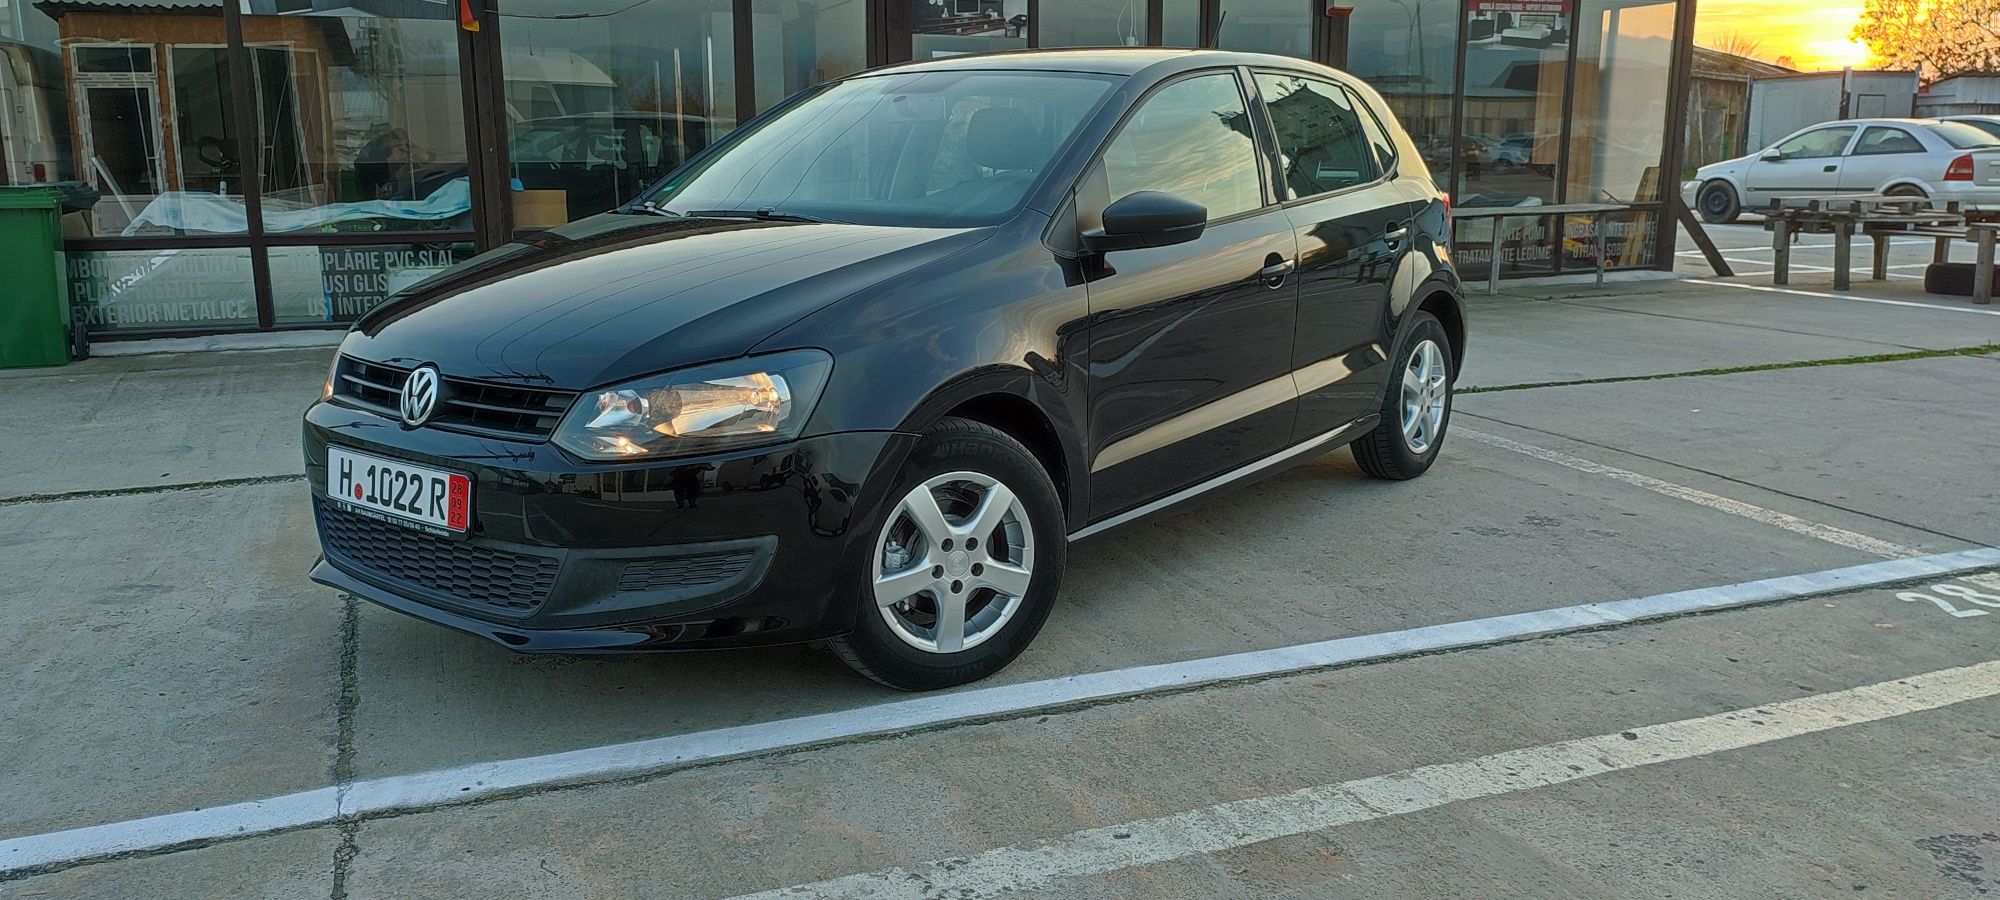 Pack to put Improve Entertain Volkswagen Polo 1.2 benzina Targu Jiu • OLX.ro